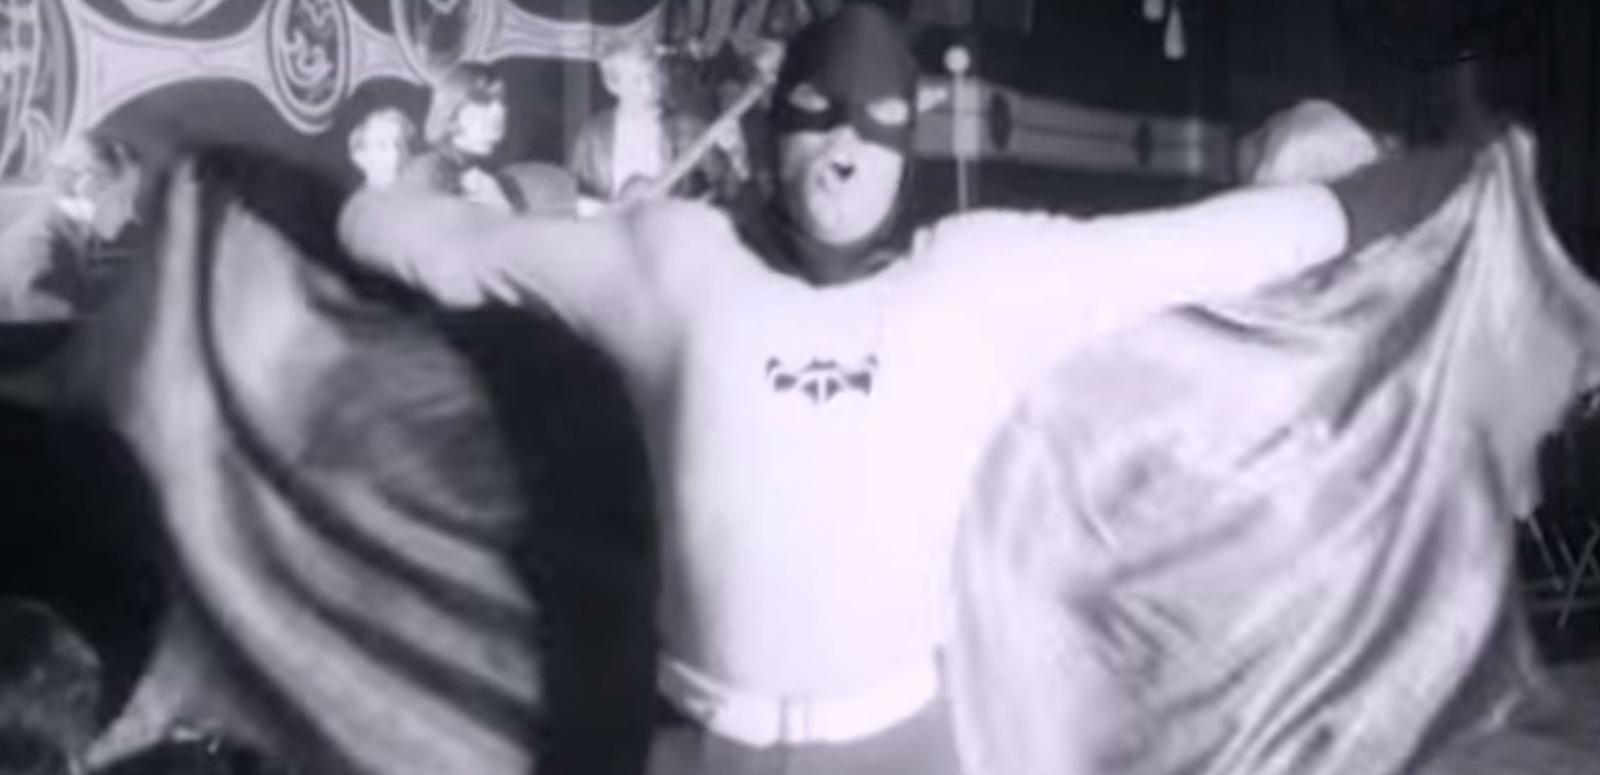 Man dressed up as batman dancing at a nightclub with go-go dancers.